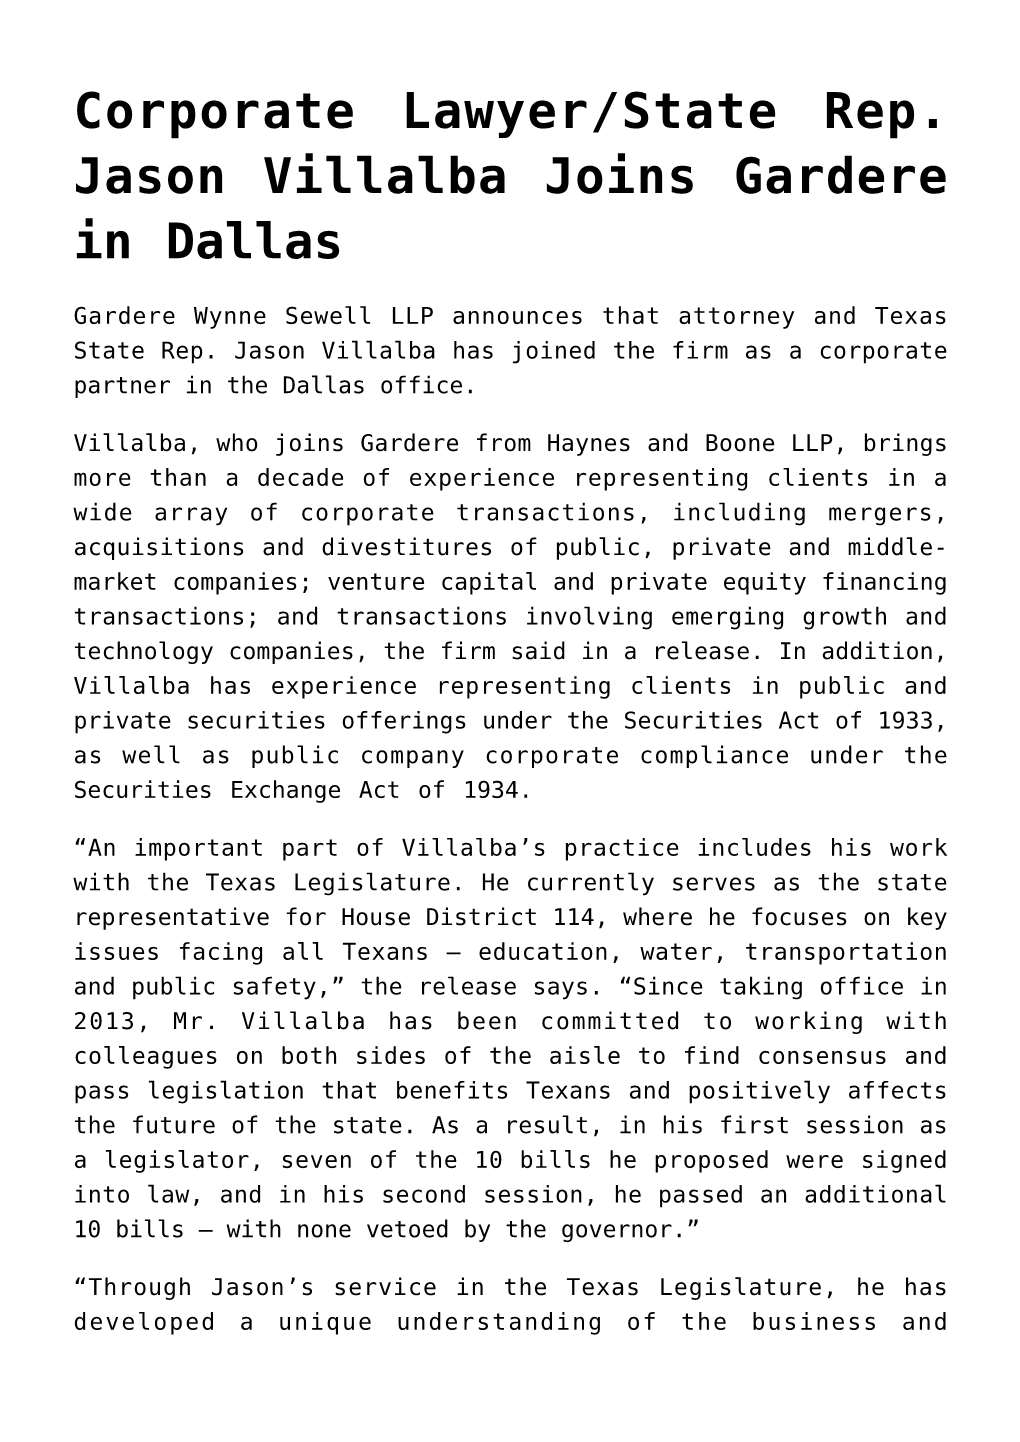 Corporate Lawyer/State Rep. Jason Villalba Joins Gardere in Dallas